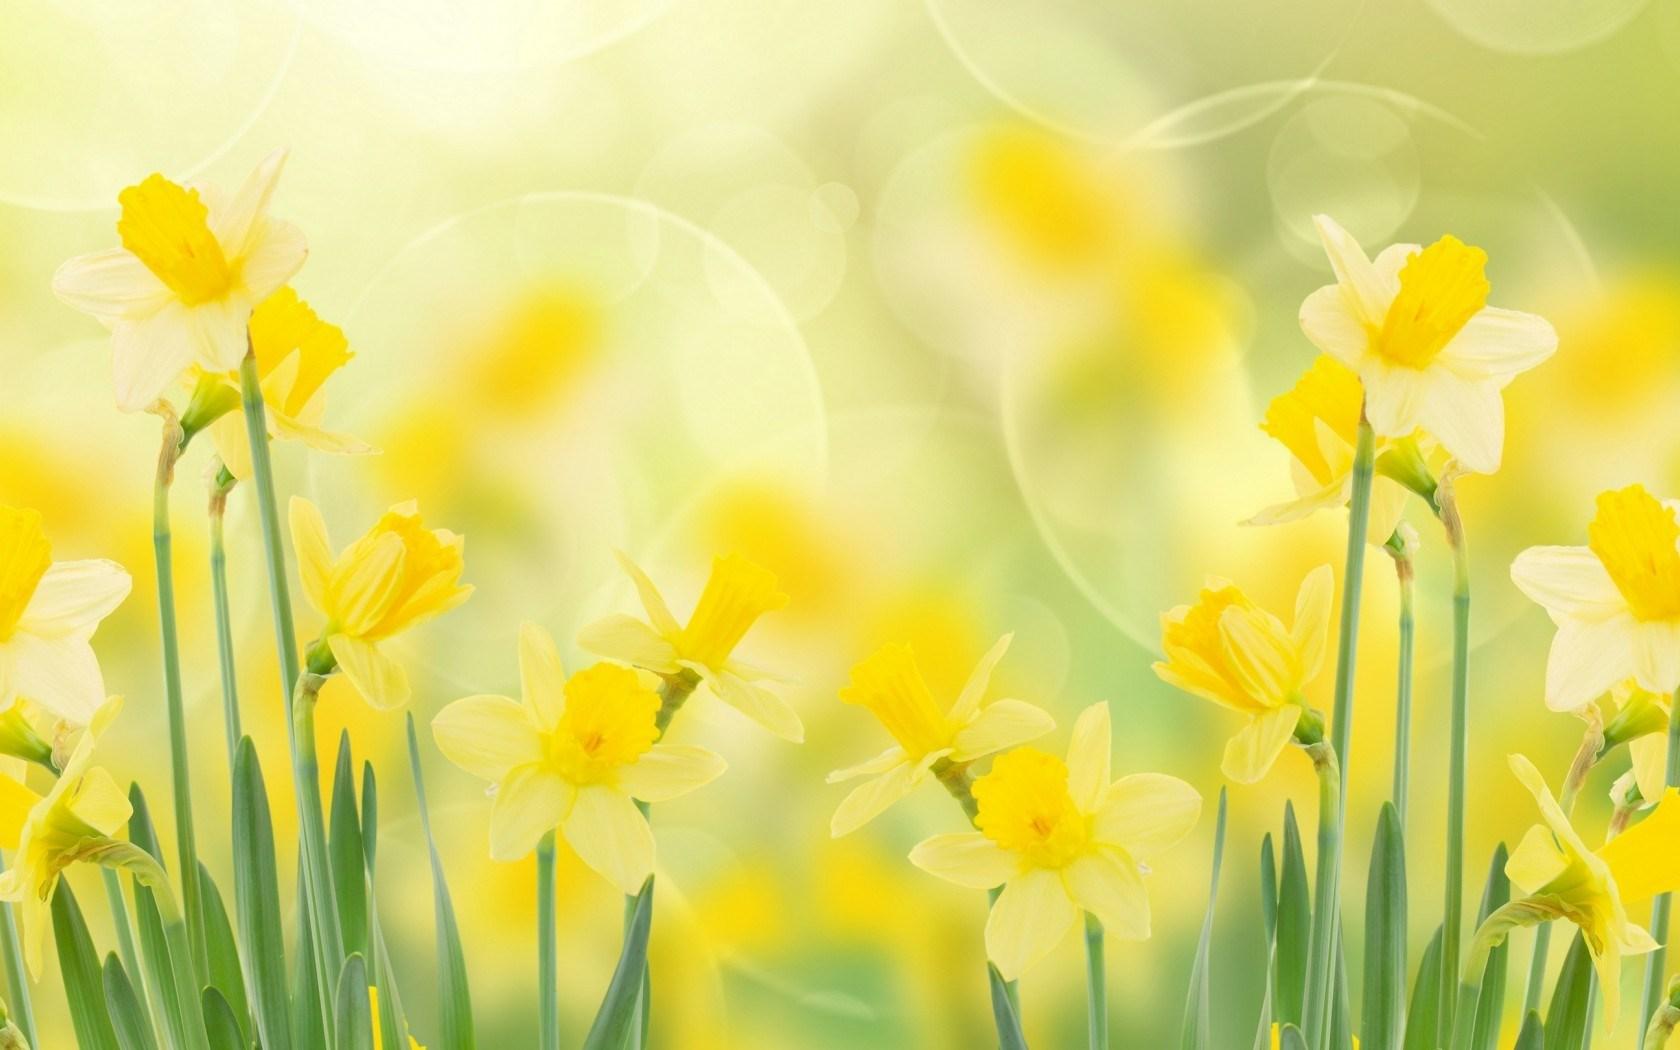 Pretty Daffodil Live Image HD Wallpaper Bsnscb